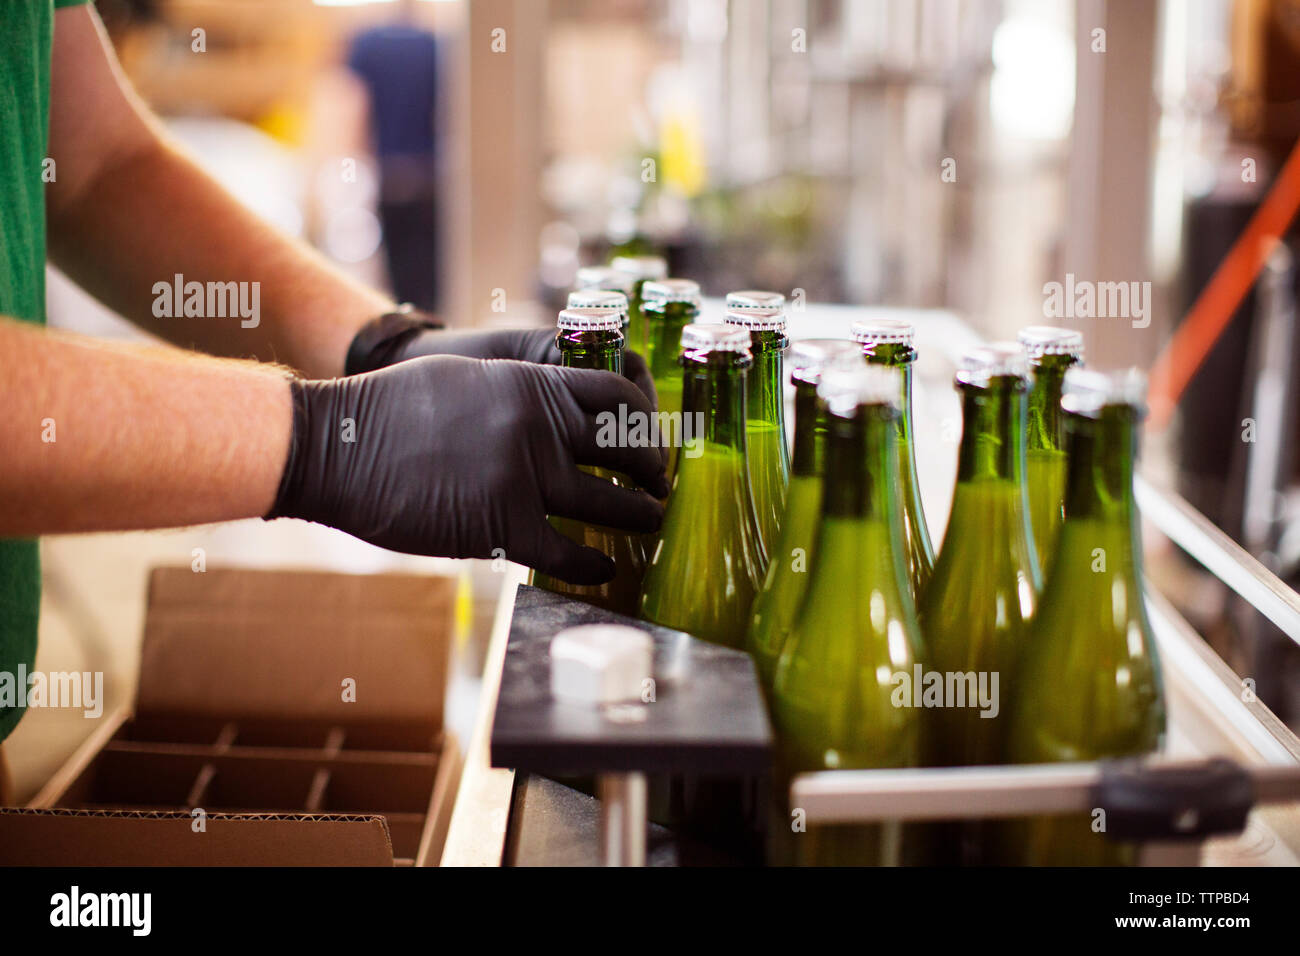 Cropped image of hands arranging beer bottles on conveyor belt at brewery Stock Photo